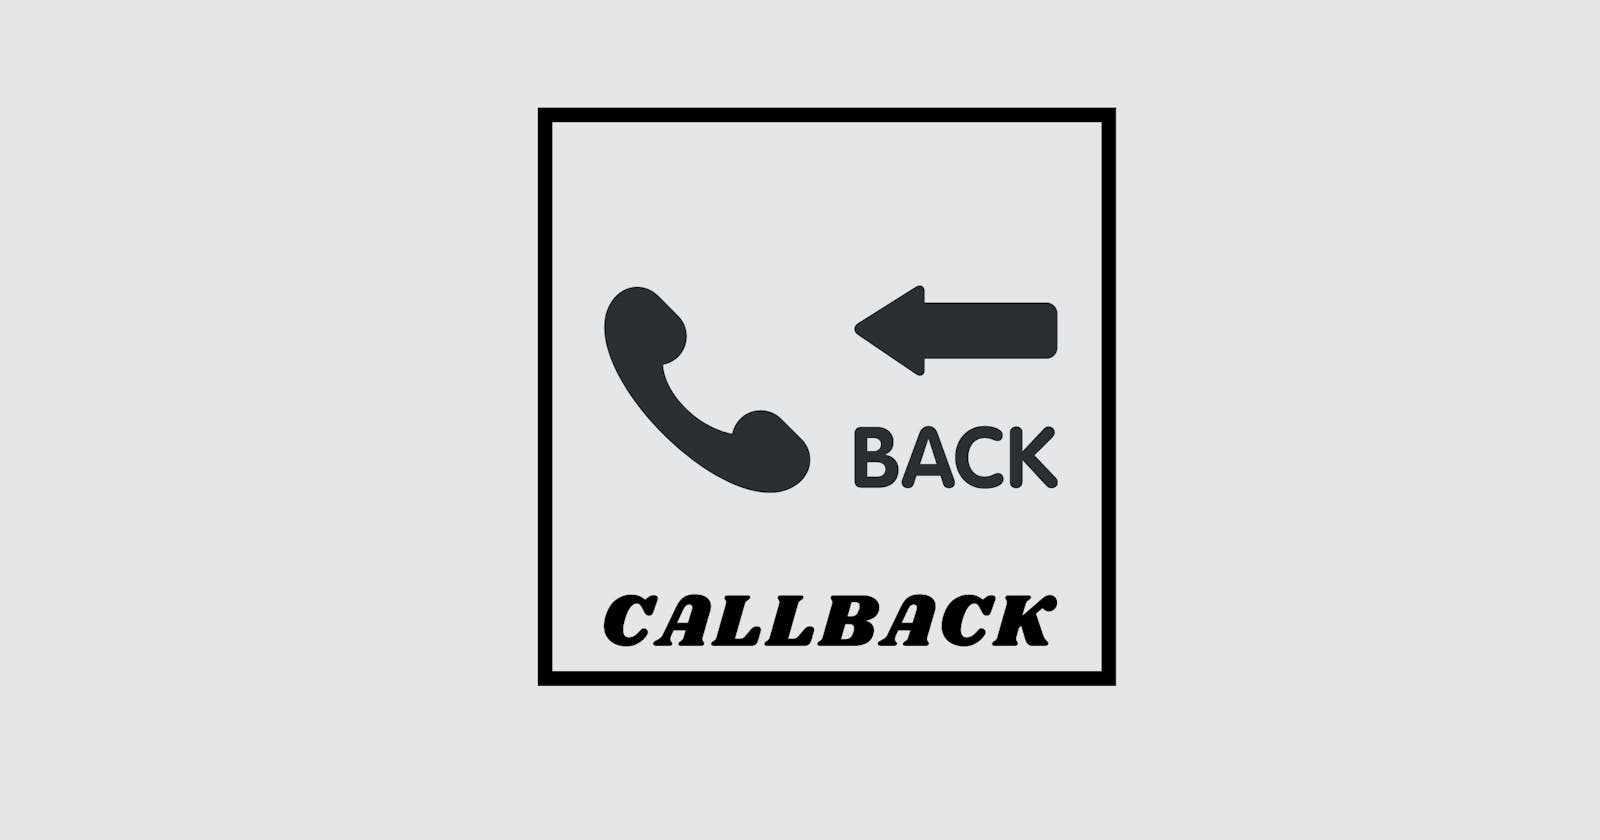 What's a Callback??!